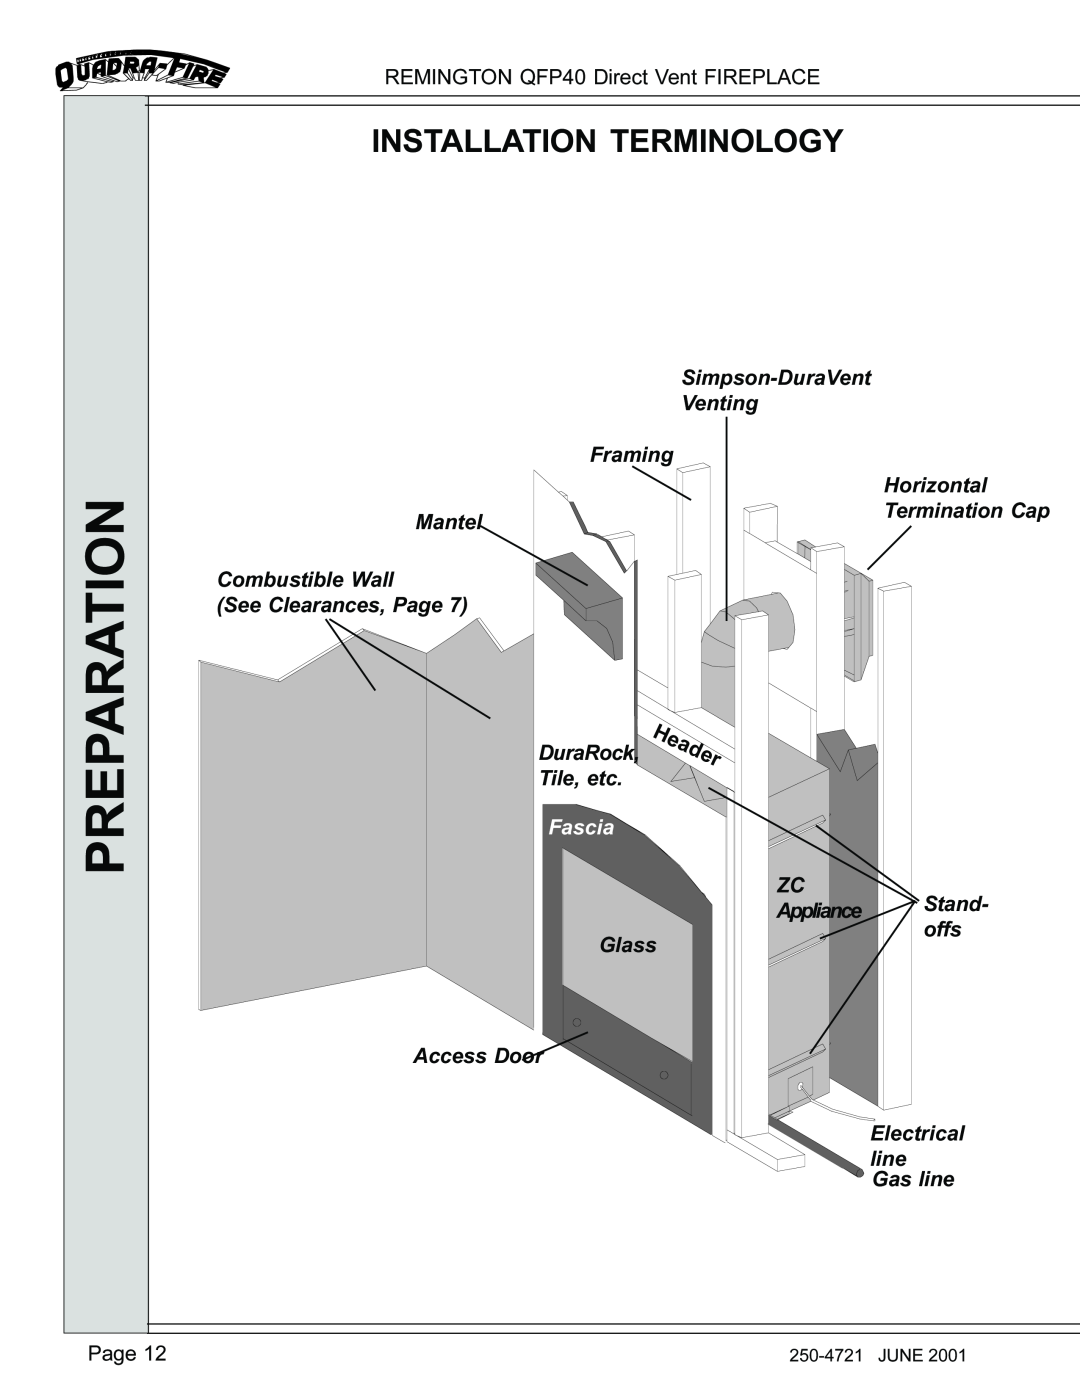 Remington QFP40 manual Preparation, Installation Terminology, Fascia 